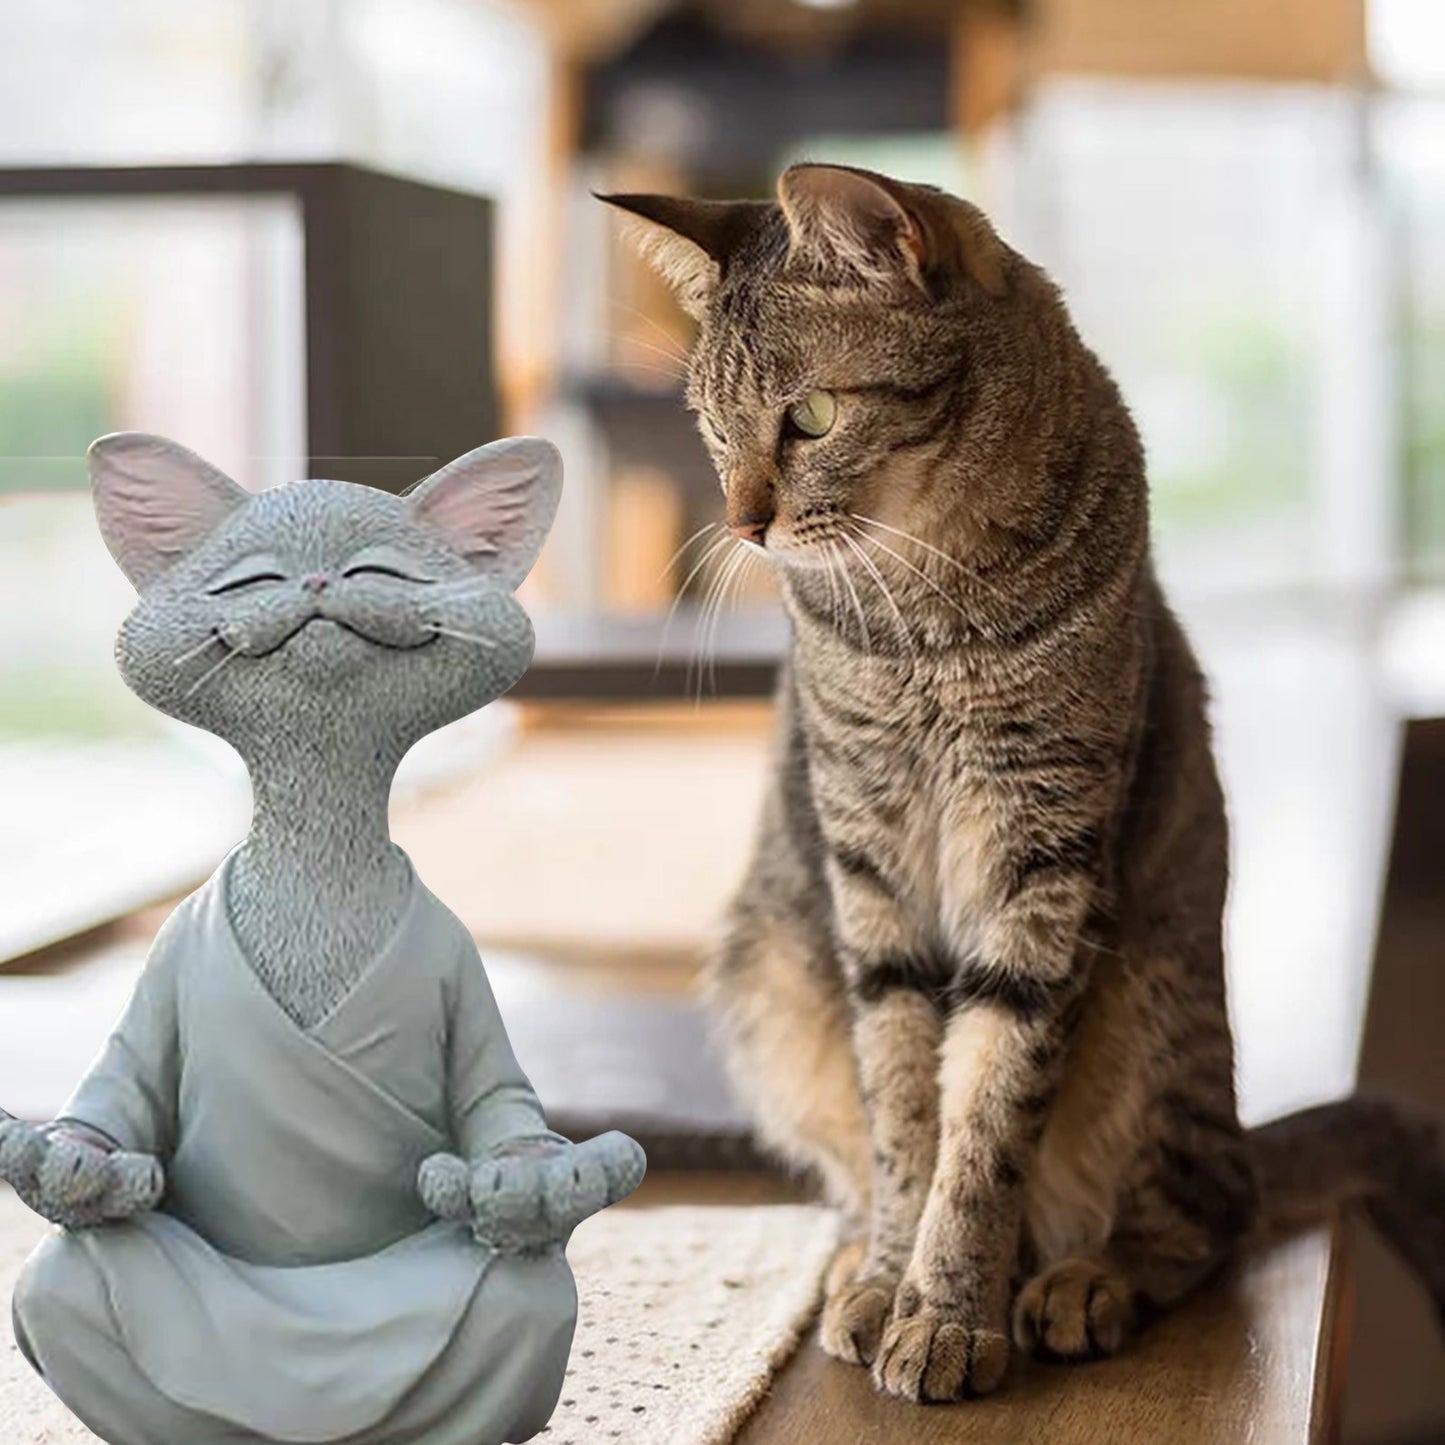 Buddha Cat Figurine, Meditation/ Yoga Collectible